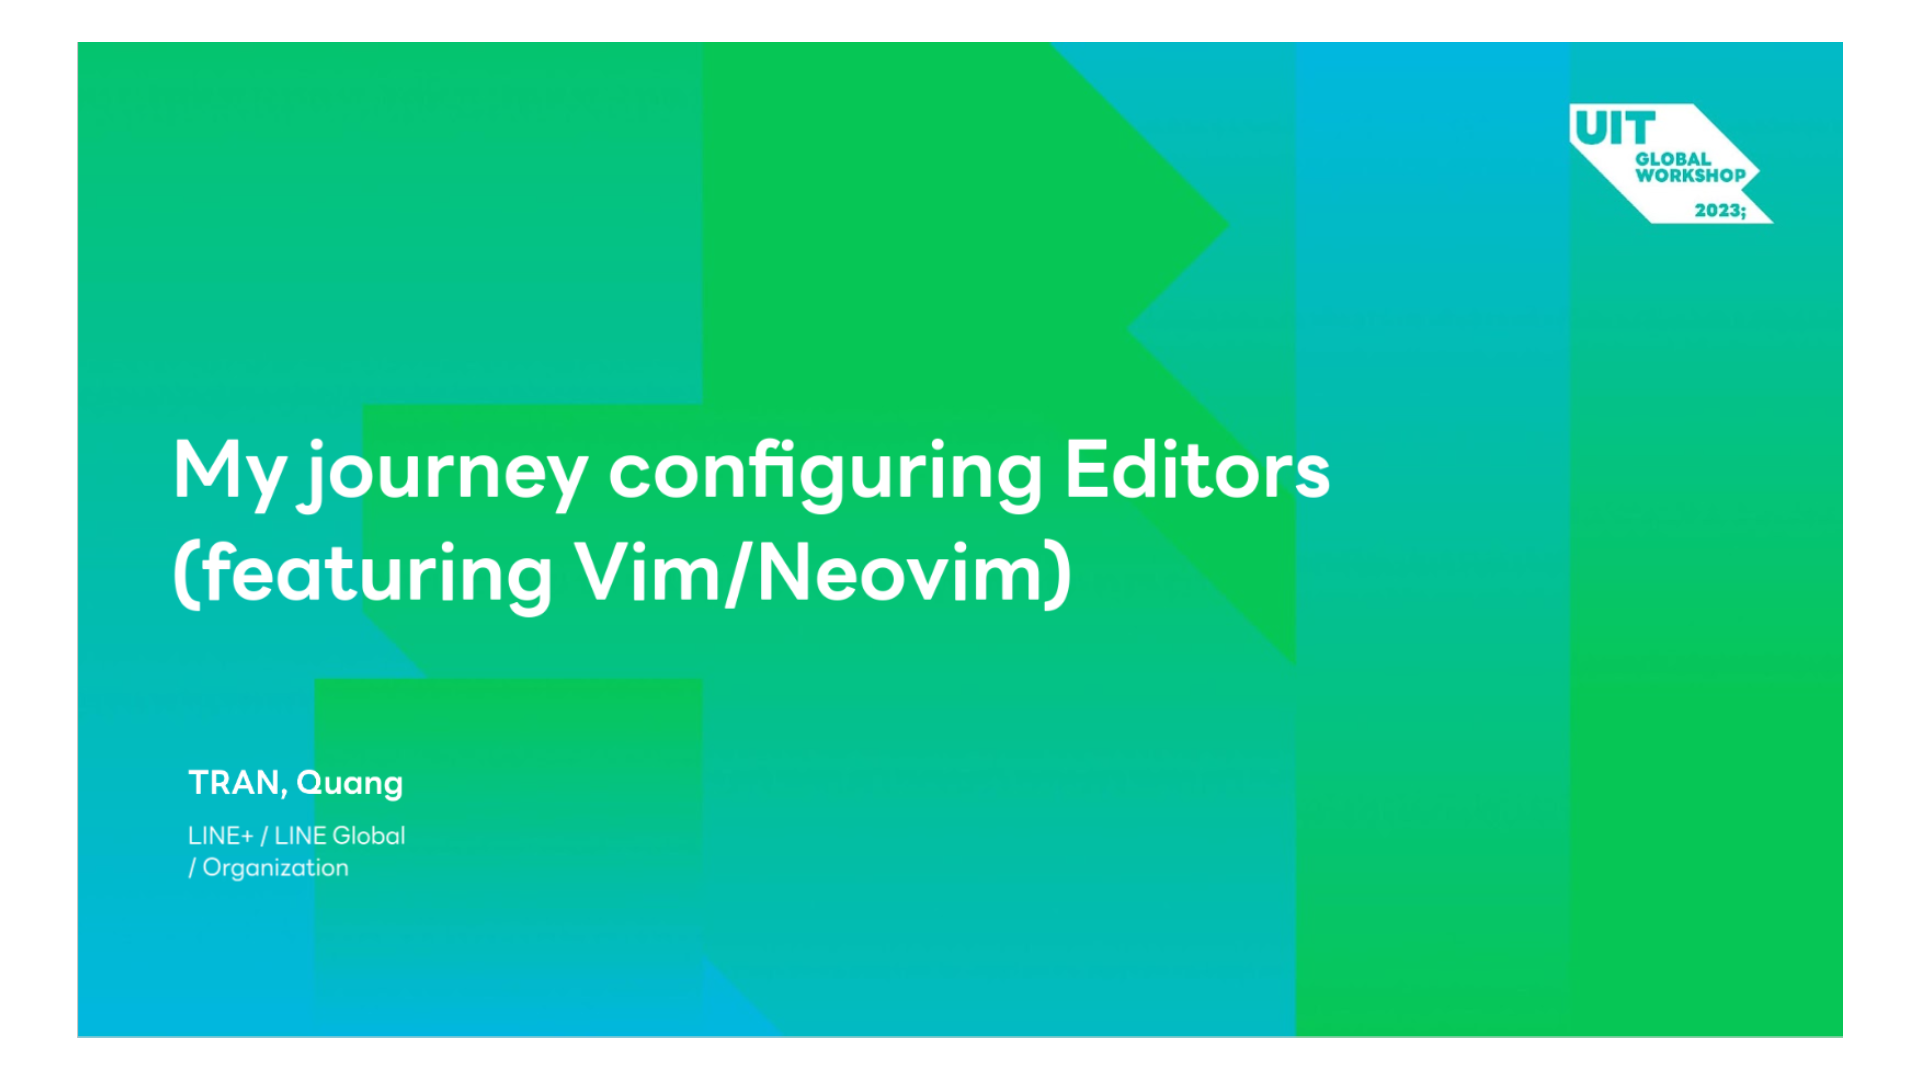 My journey configuring Editors (featuring Vim/Neovim)